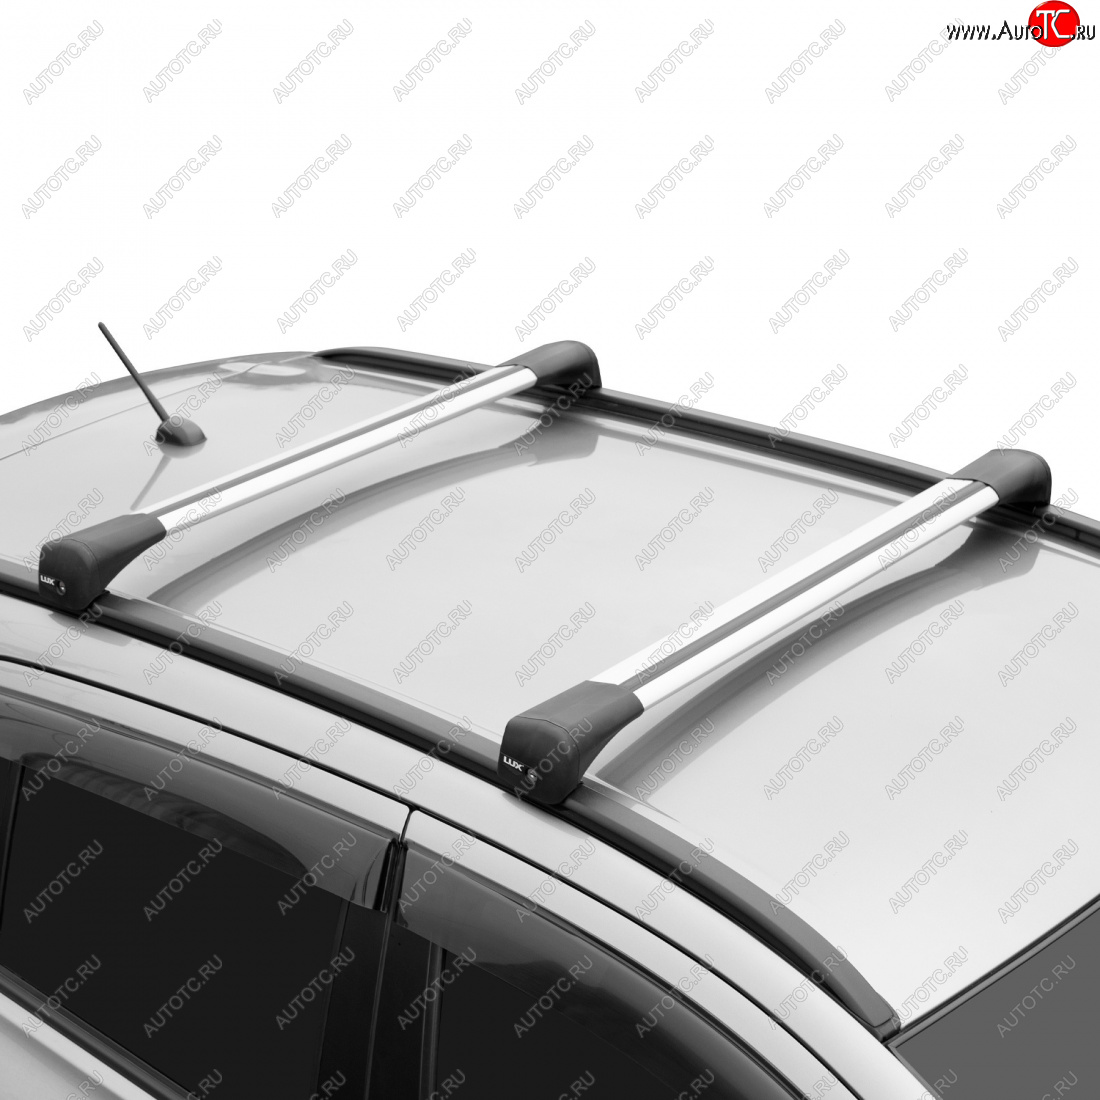 12 897 р. Багажник сборе на низкие рейлинги LUX BRIDGE  Mitsubishi ASX (2010-2024) (дуги аэро-трэвэл, серебро, 99/105 см)